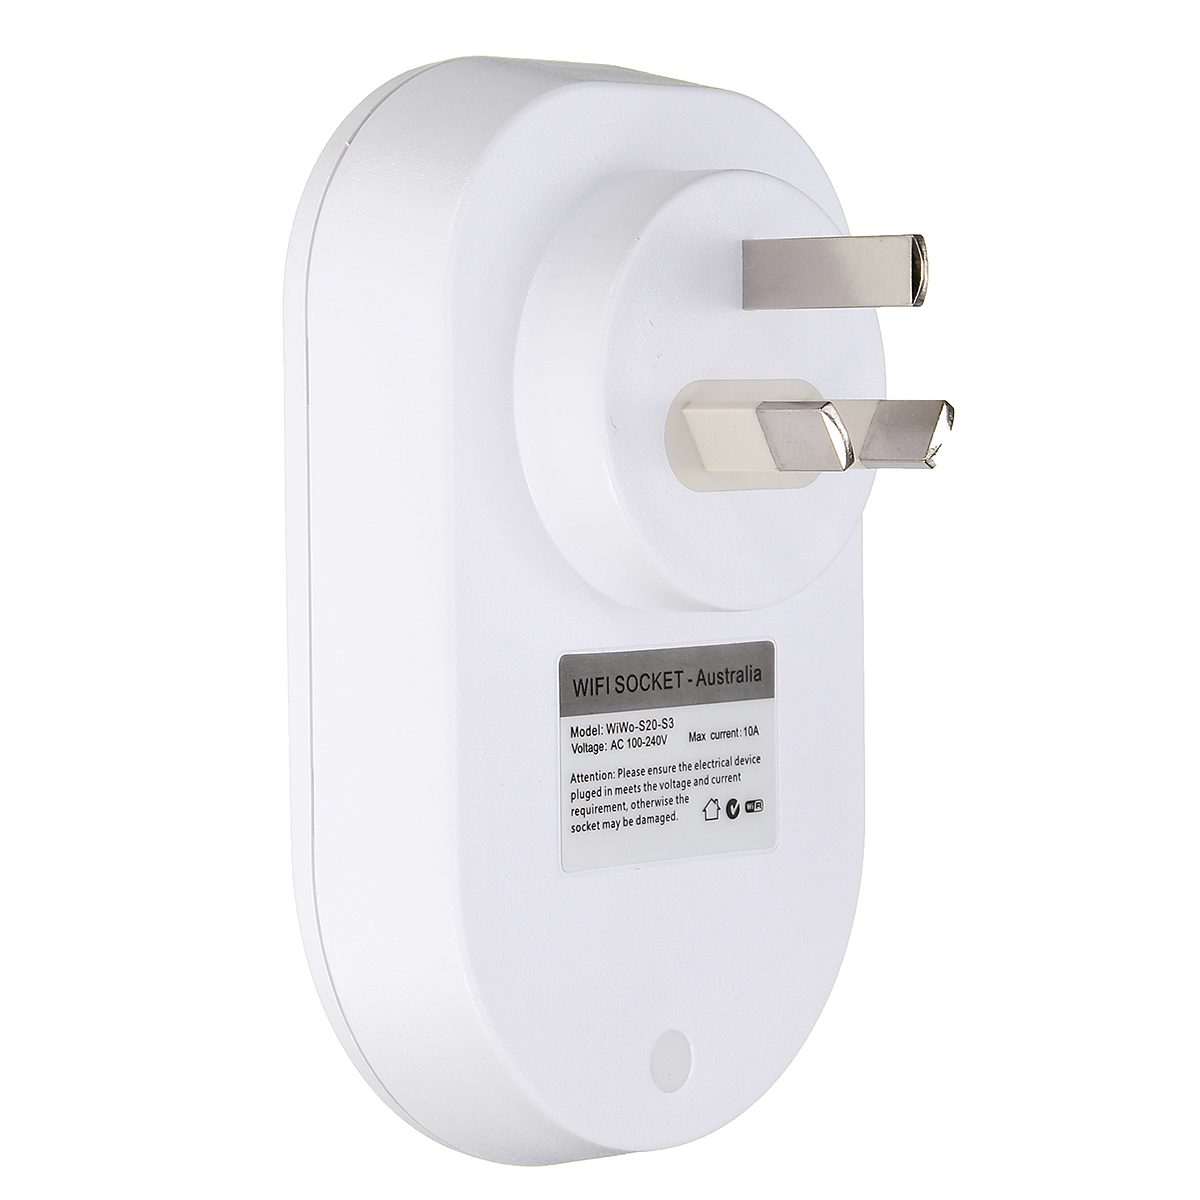 ORVIBO-WiFi-Wireless-Mobile-Remote-Control-Switch-Smart-Home-Socket-AU-Plug-1162957-9